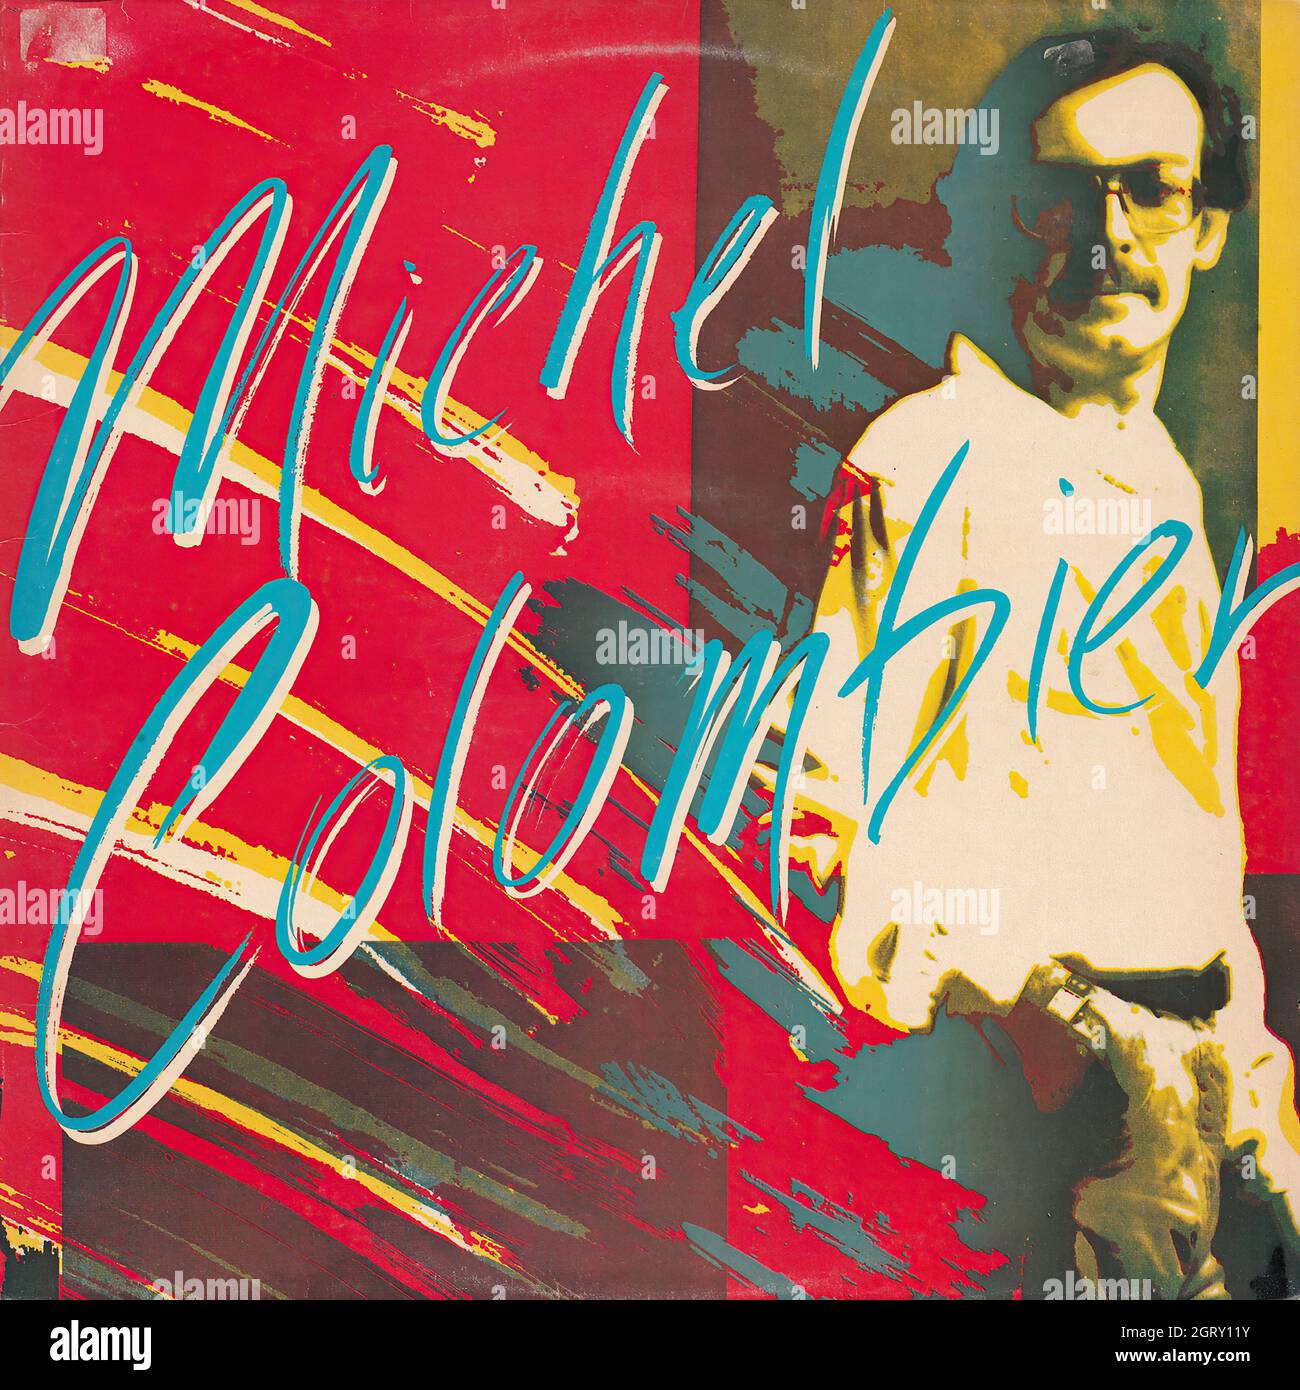 Michel Colombier - Michel Colombier - Vintage Vinyl Record Cover Stock Photo